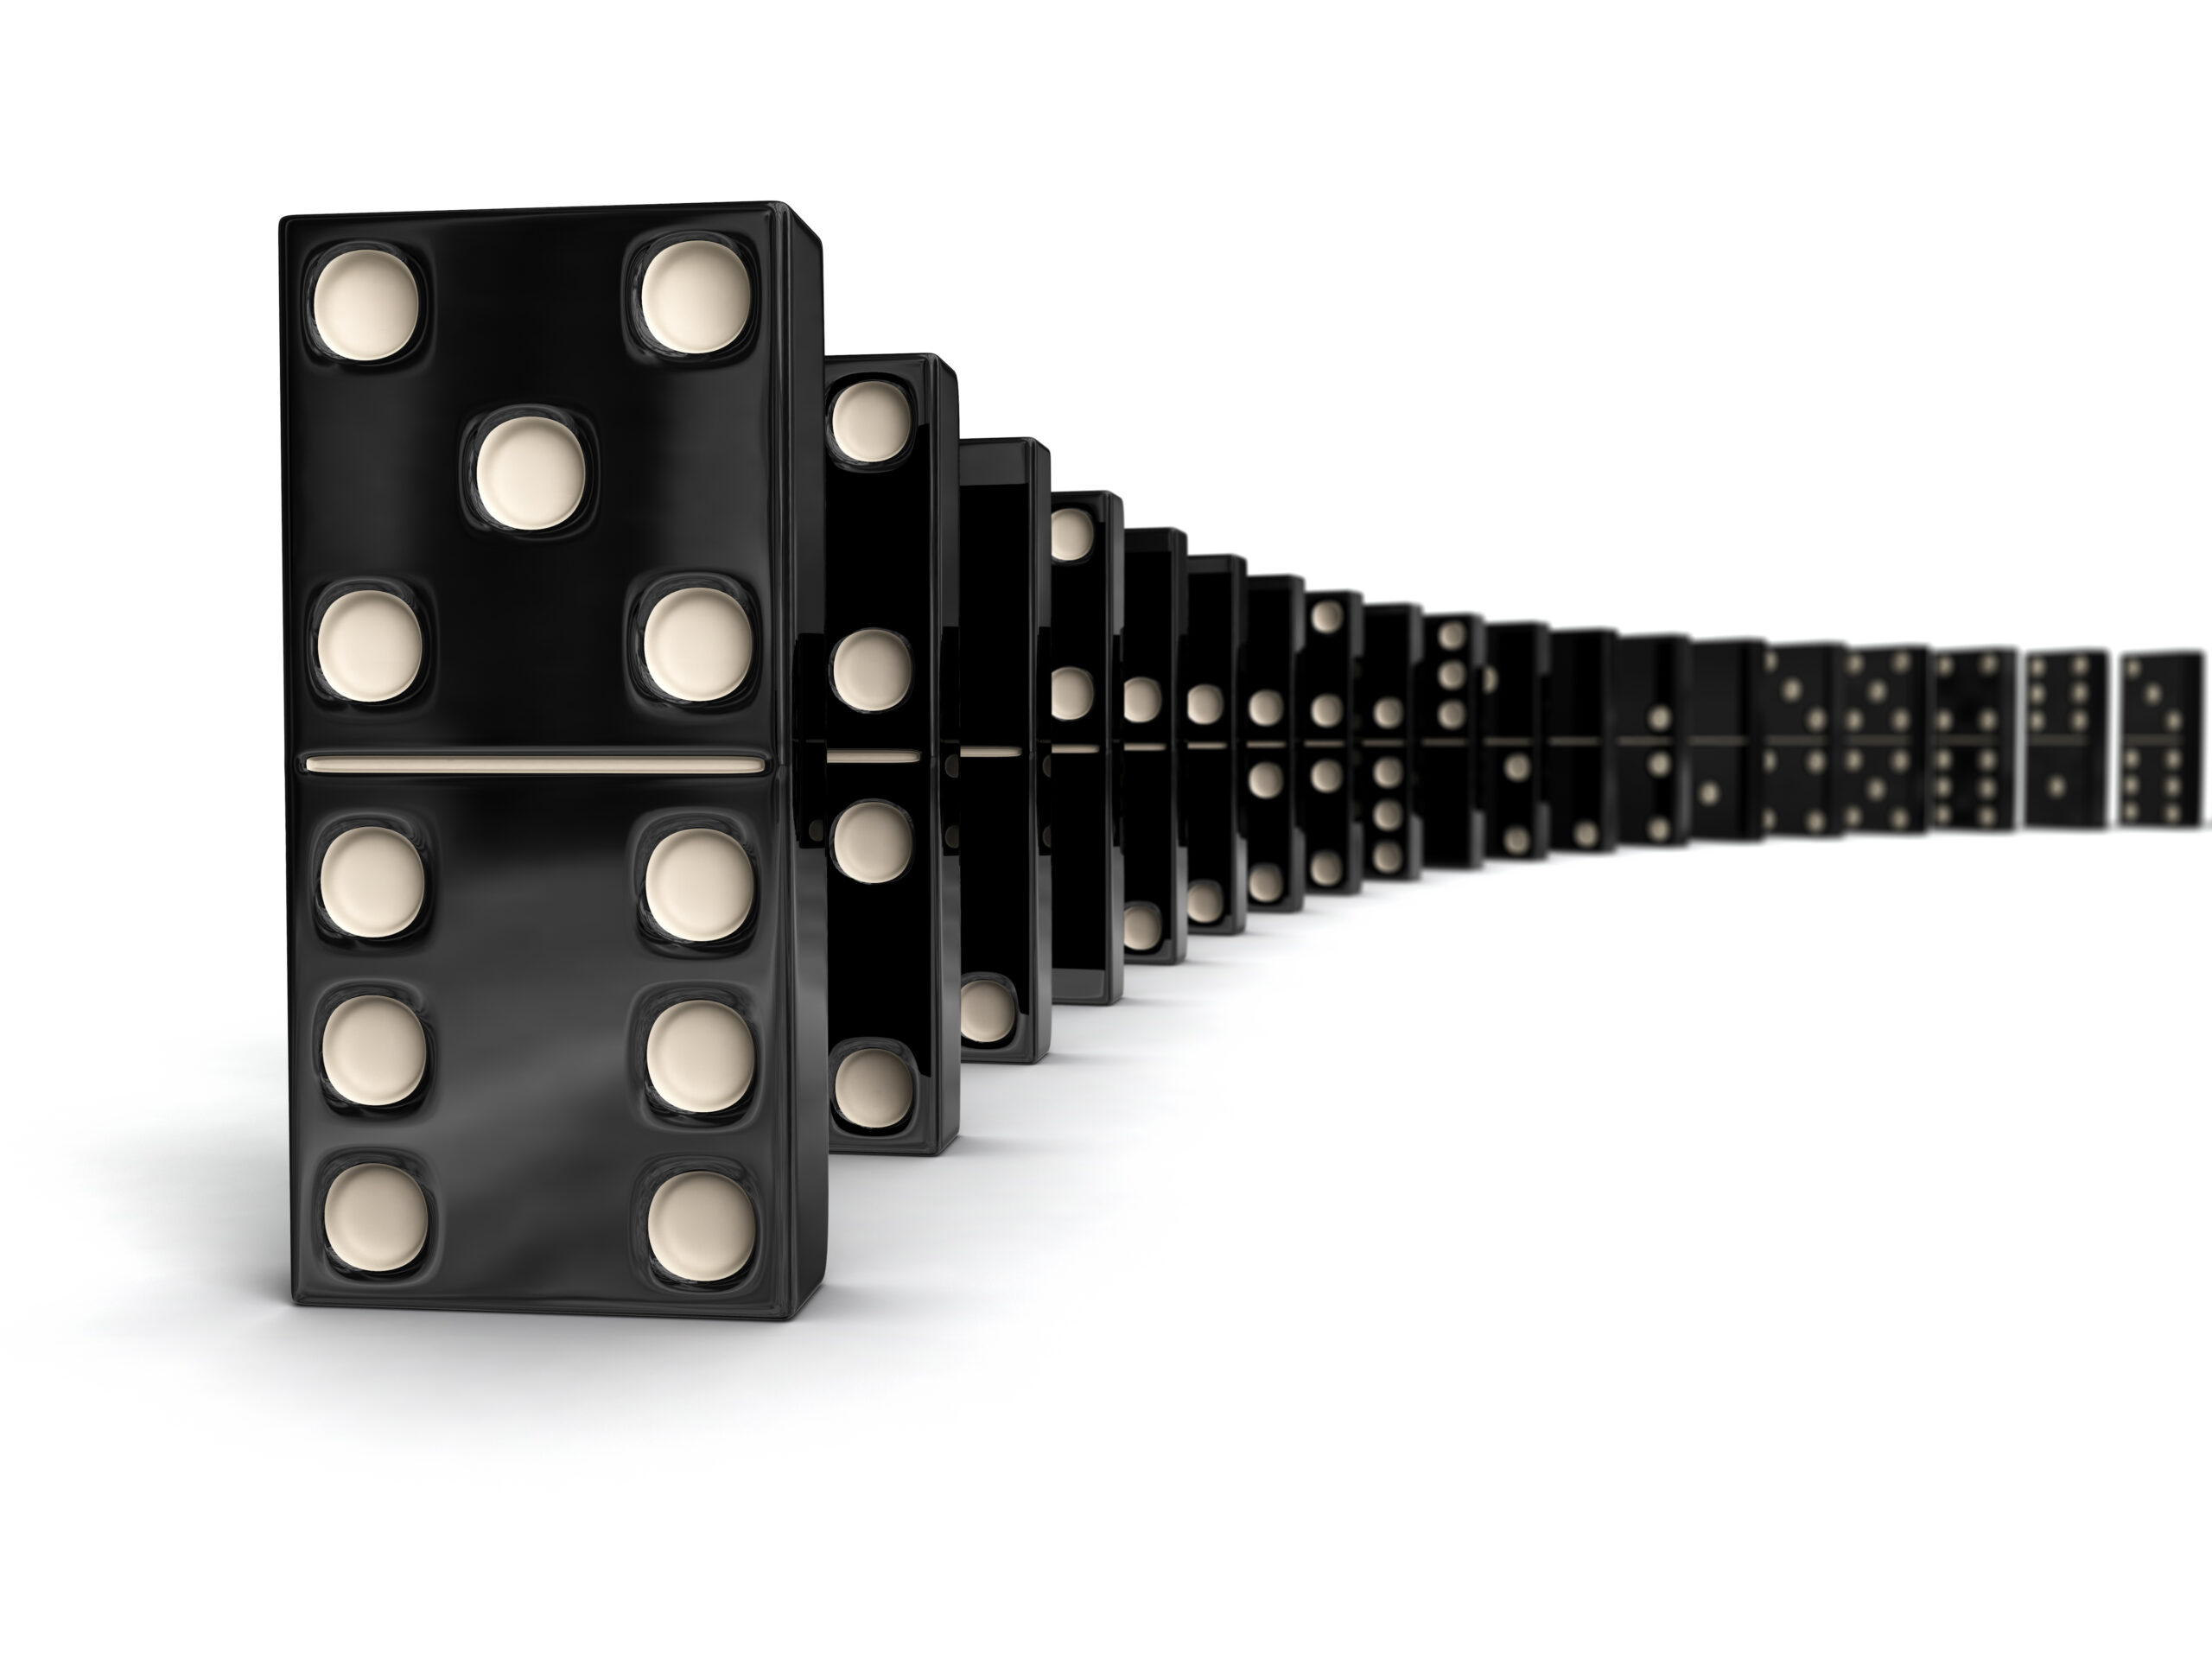 Domino - row of black dominoes on white